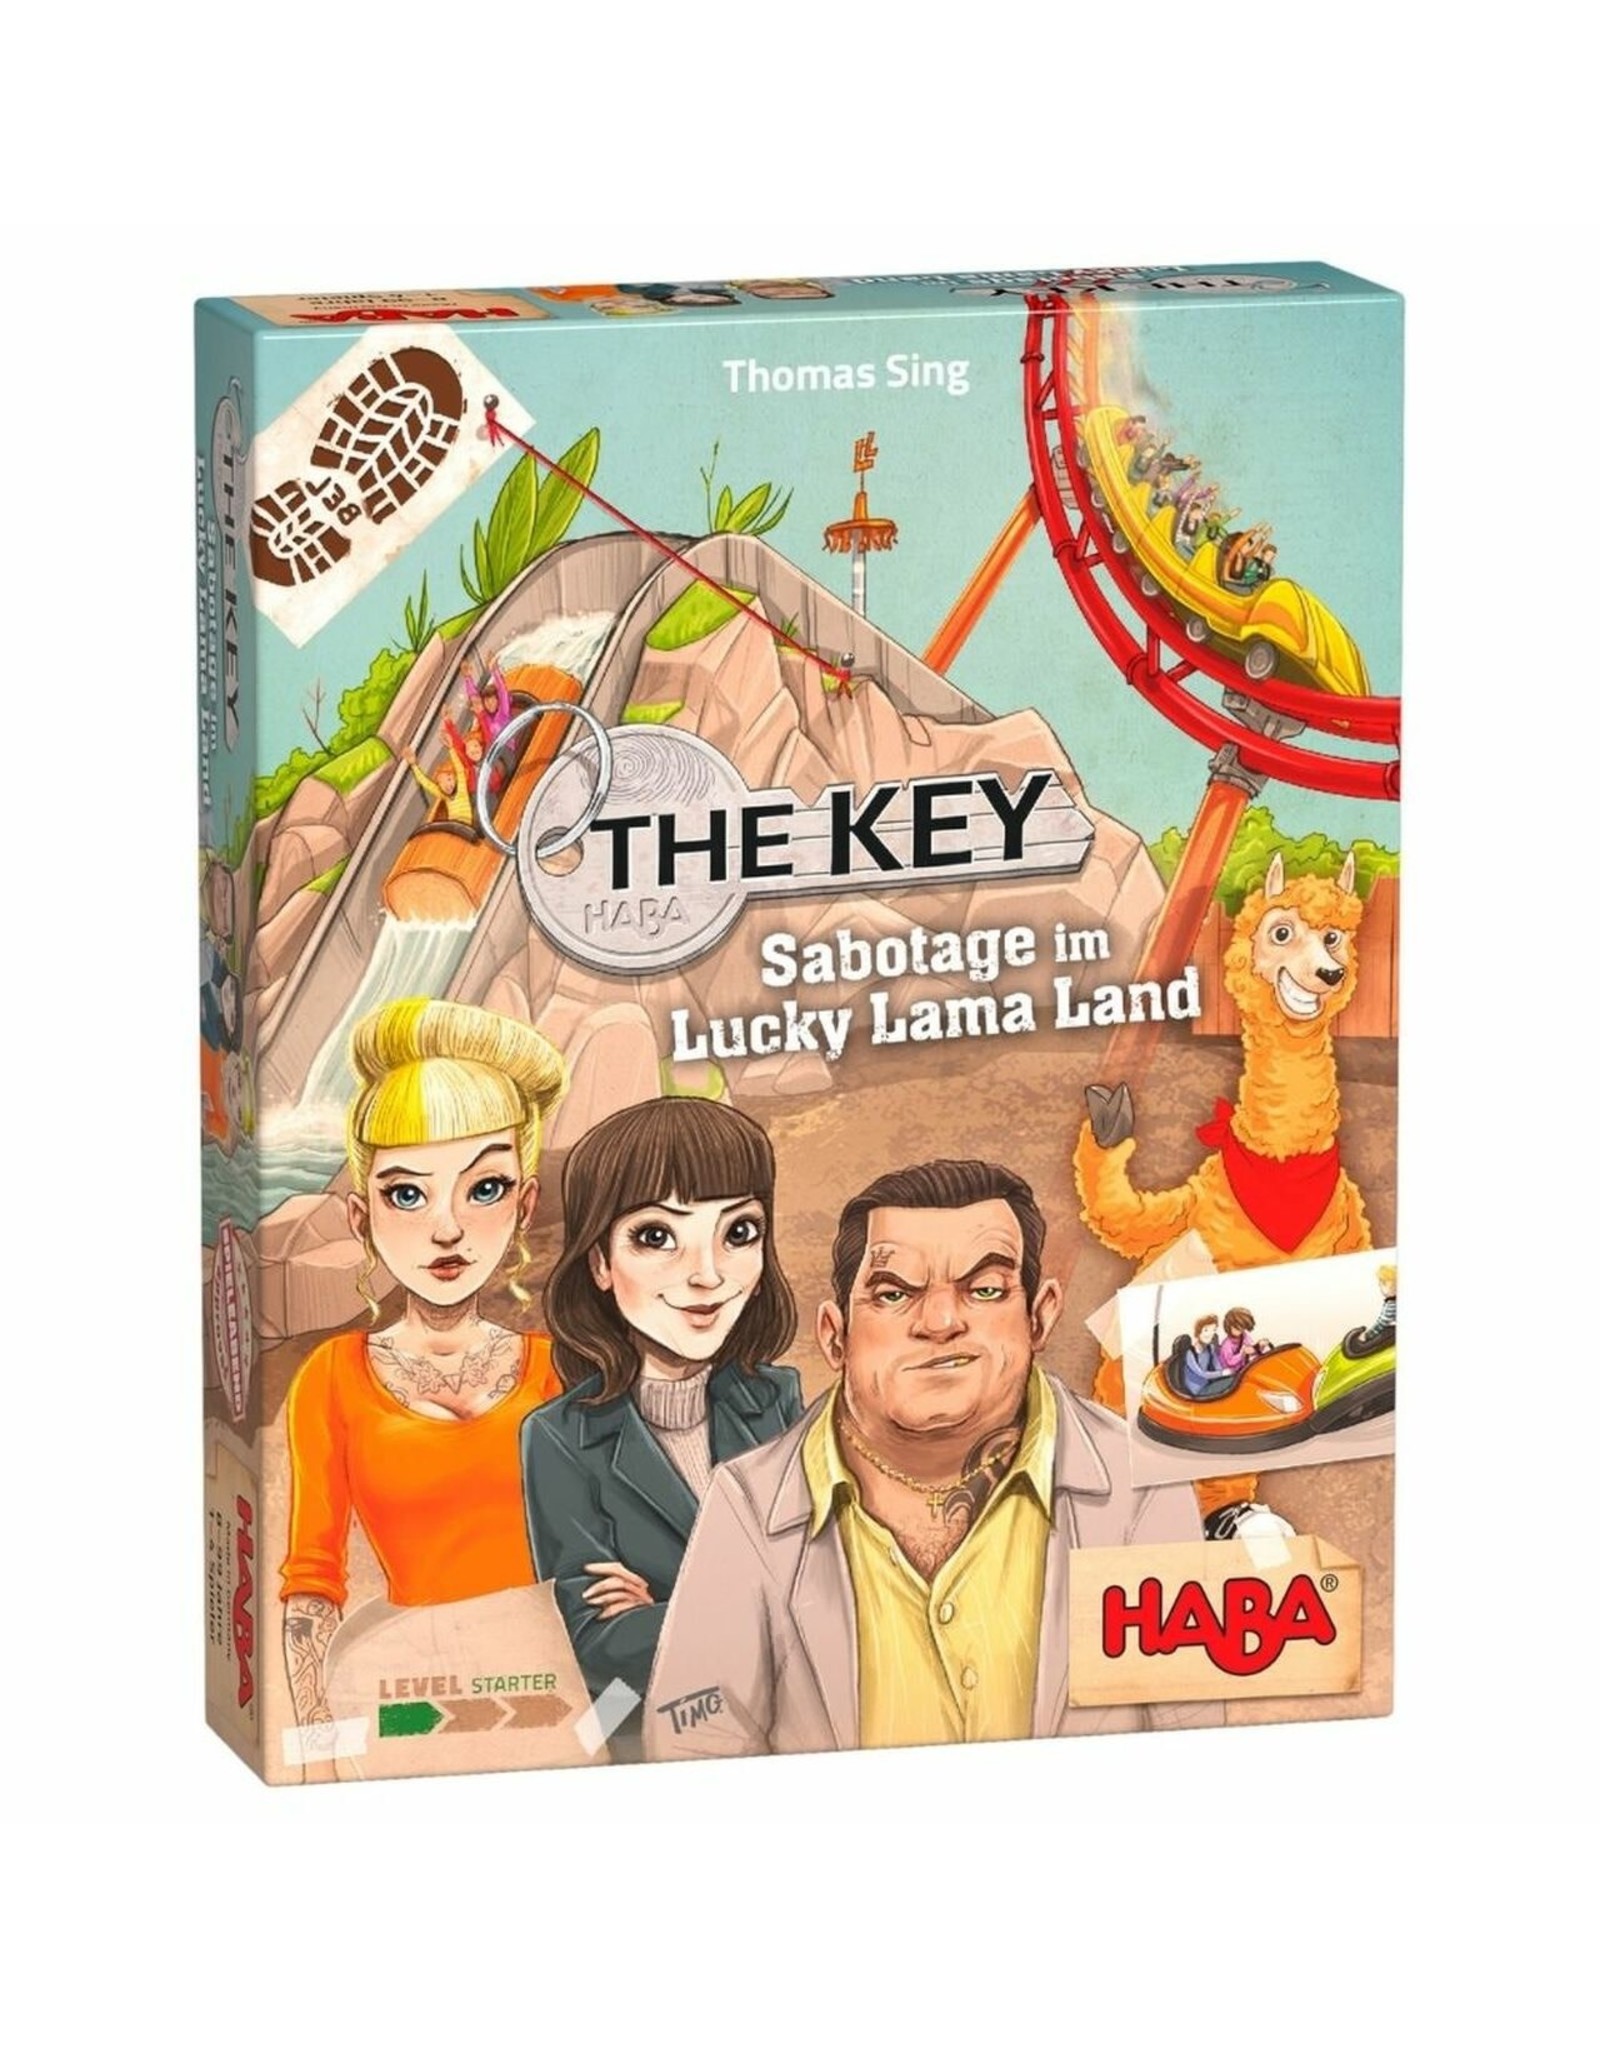 Haba The key - Sabotage at Lucky llama land (Bilingue)